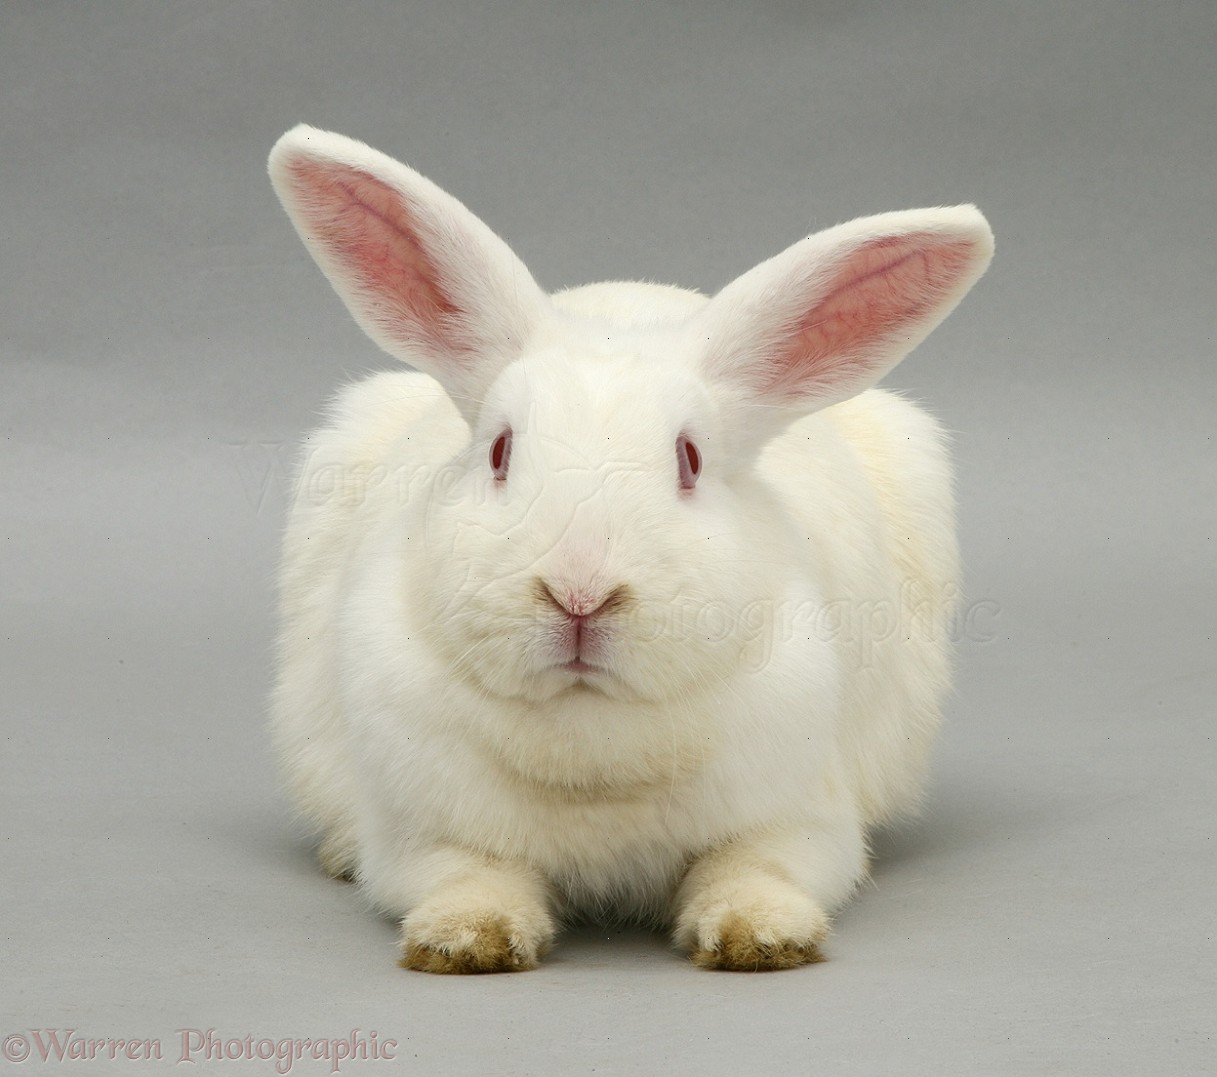 WP11728 White rabbit.